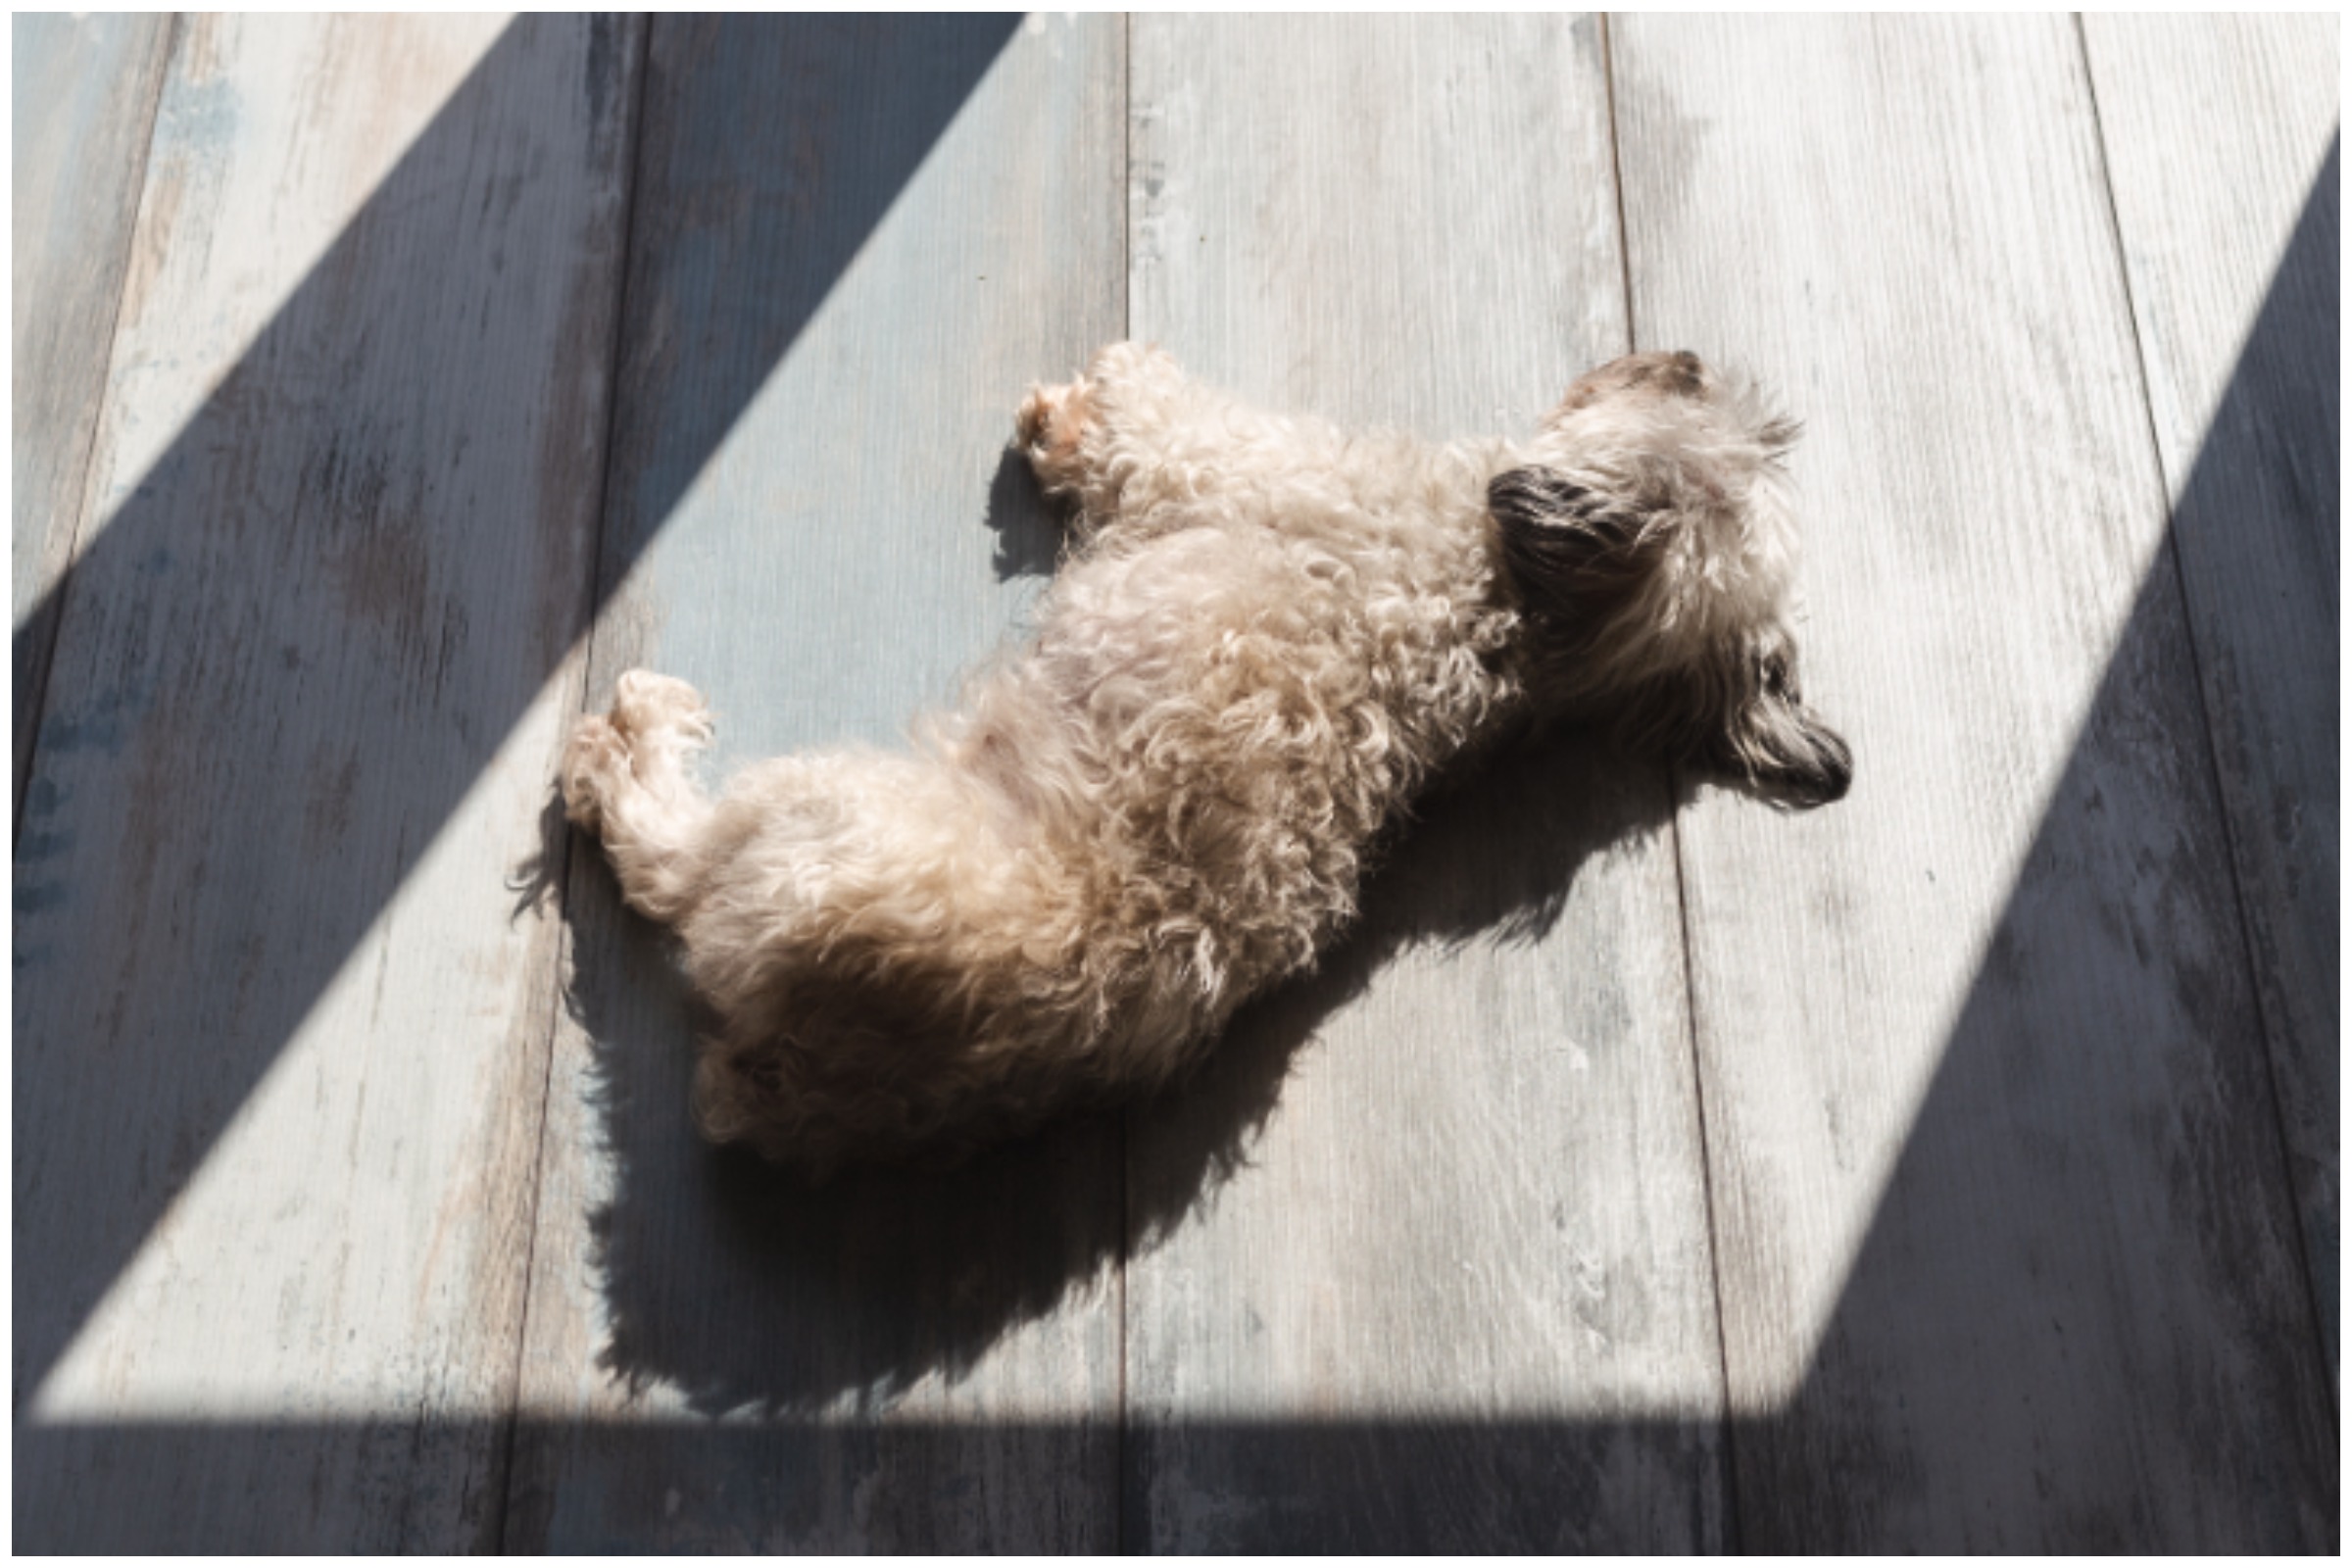 Solar Powered': Dog Sunbathing in Sunny Spot Leaves Internet in